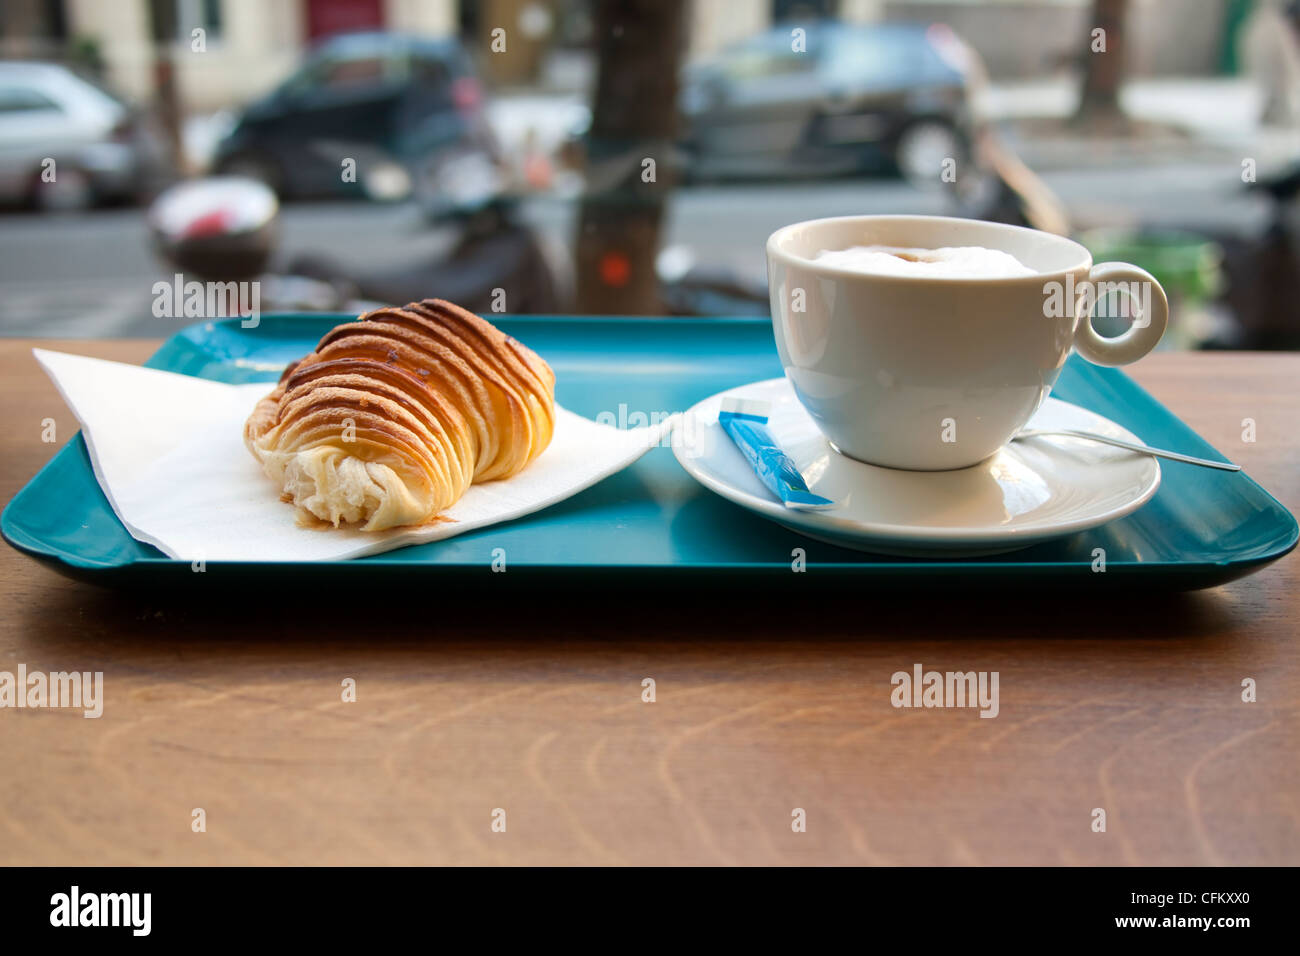 Desayuno parisino Foto de stock